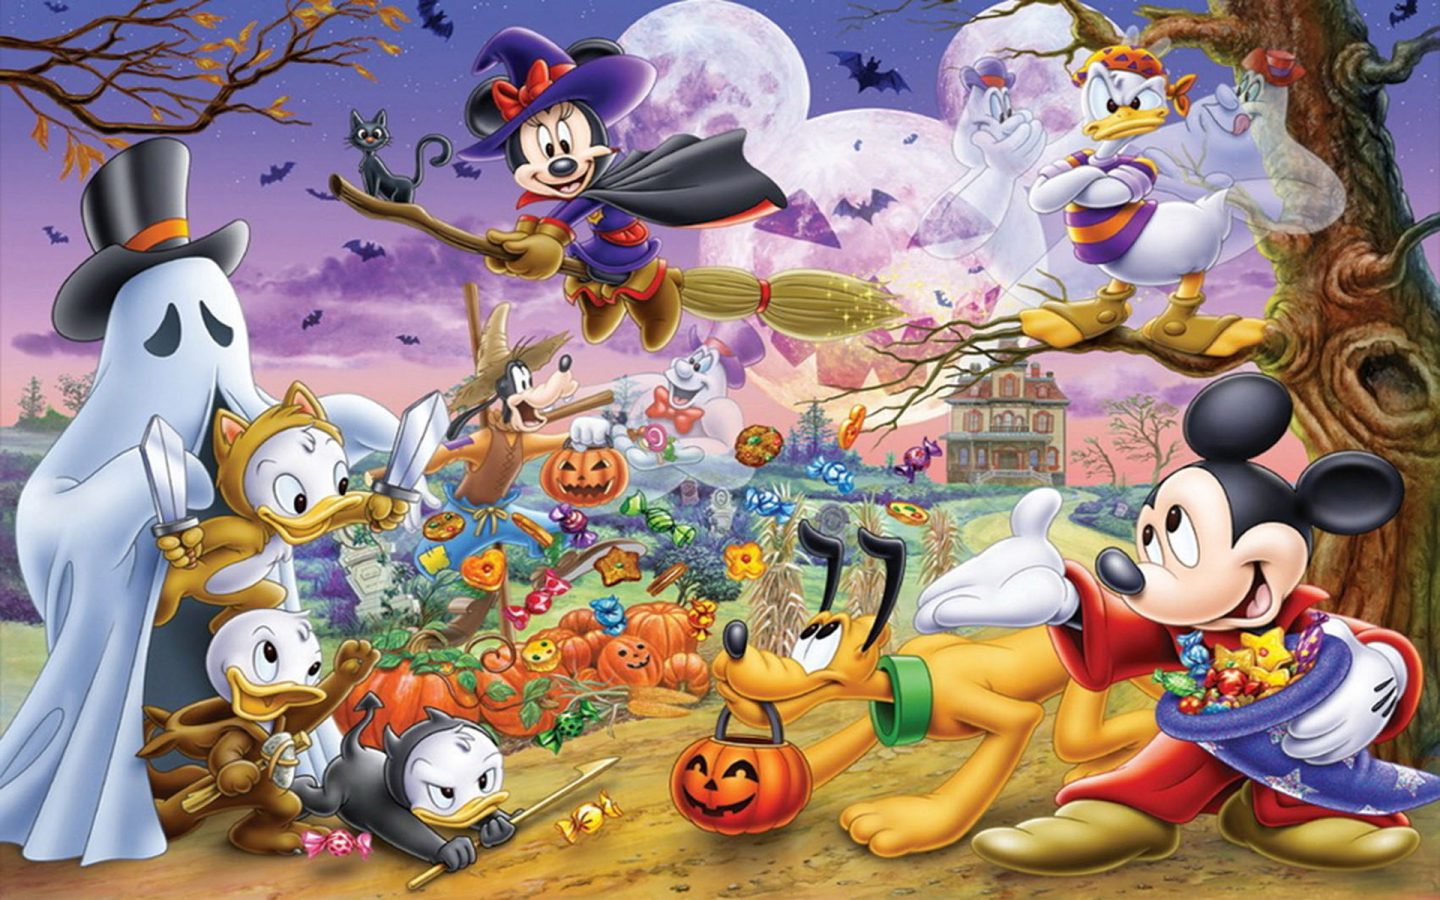 Halloween Cartoon Mickey And Minnie Mouse Donald Duck Pluto HD Wallpaper For Deskx1200, Wallpaper13.com